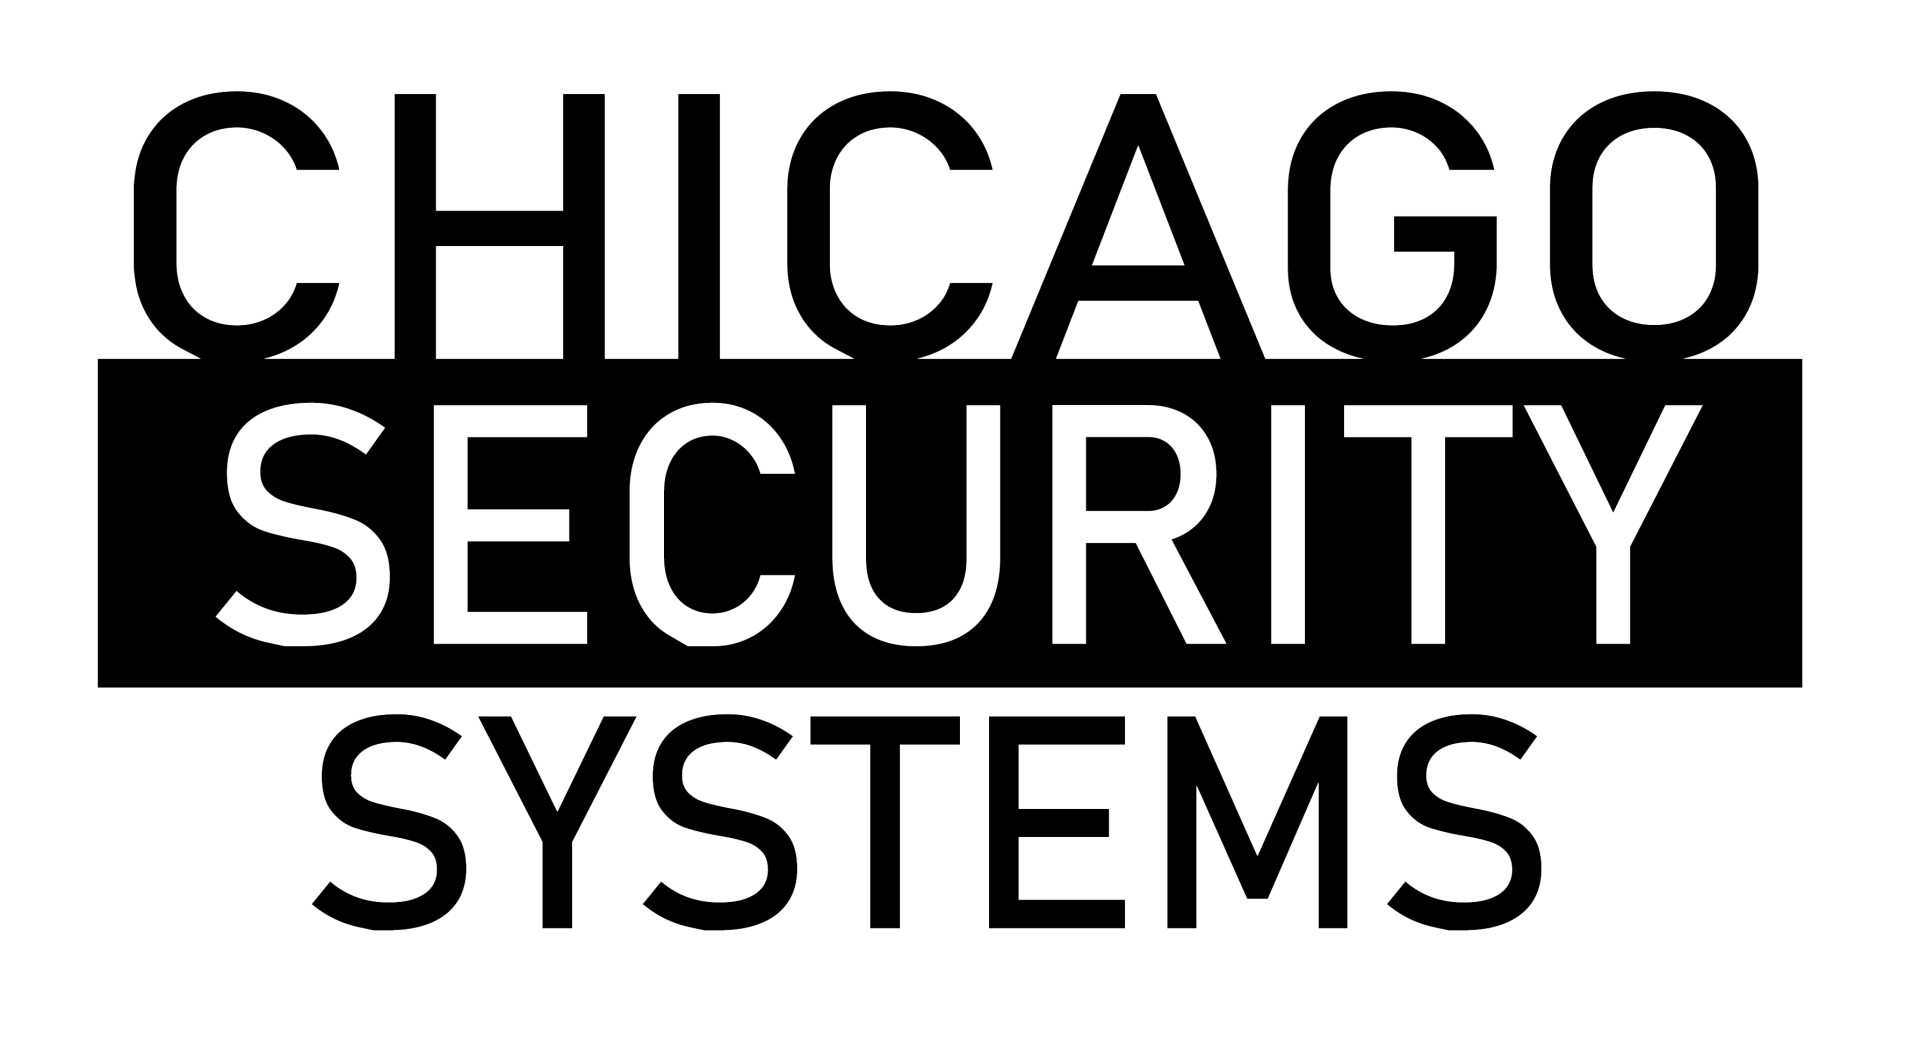 chicago security systems security cameras cctv access control